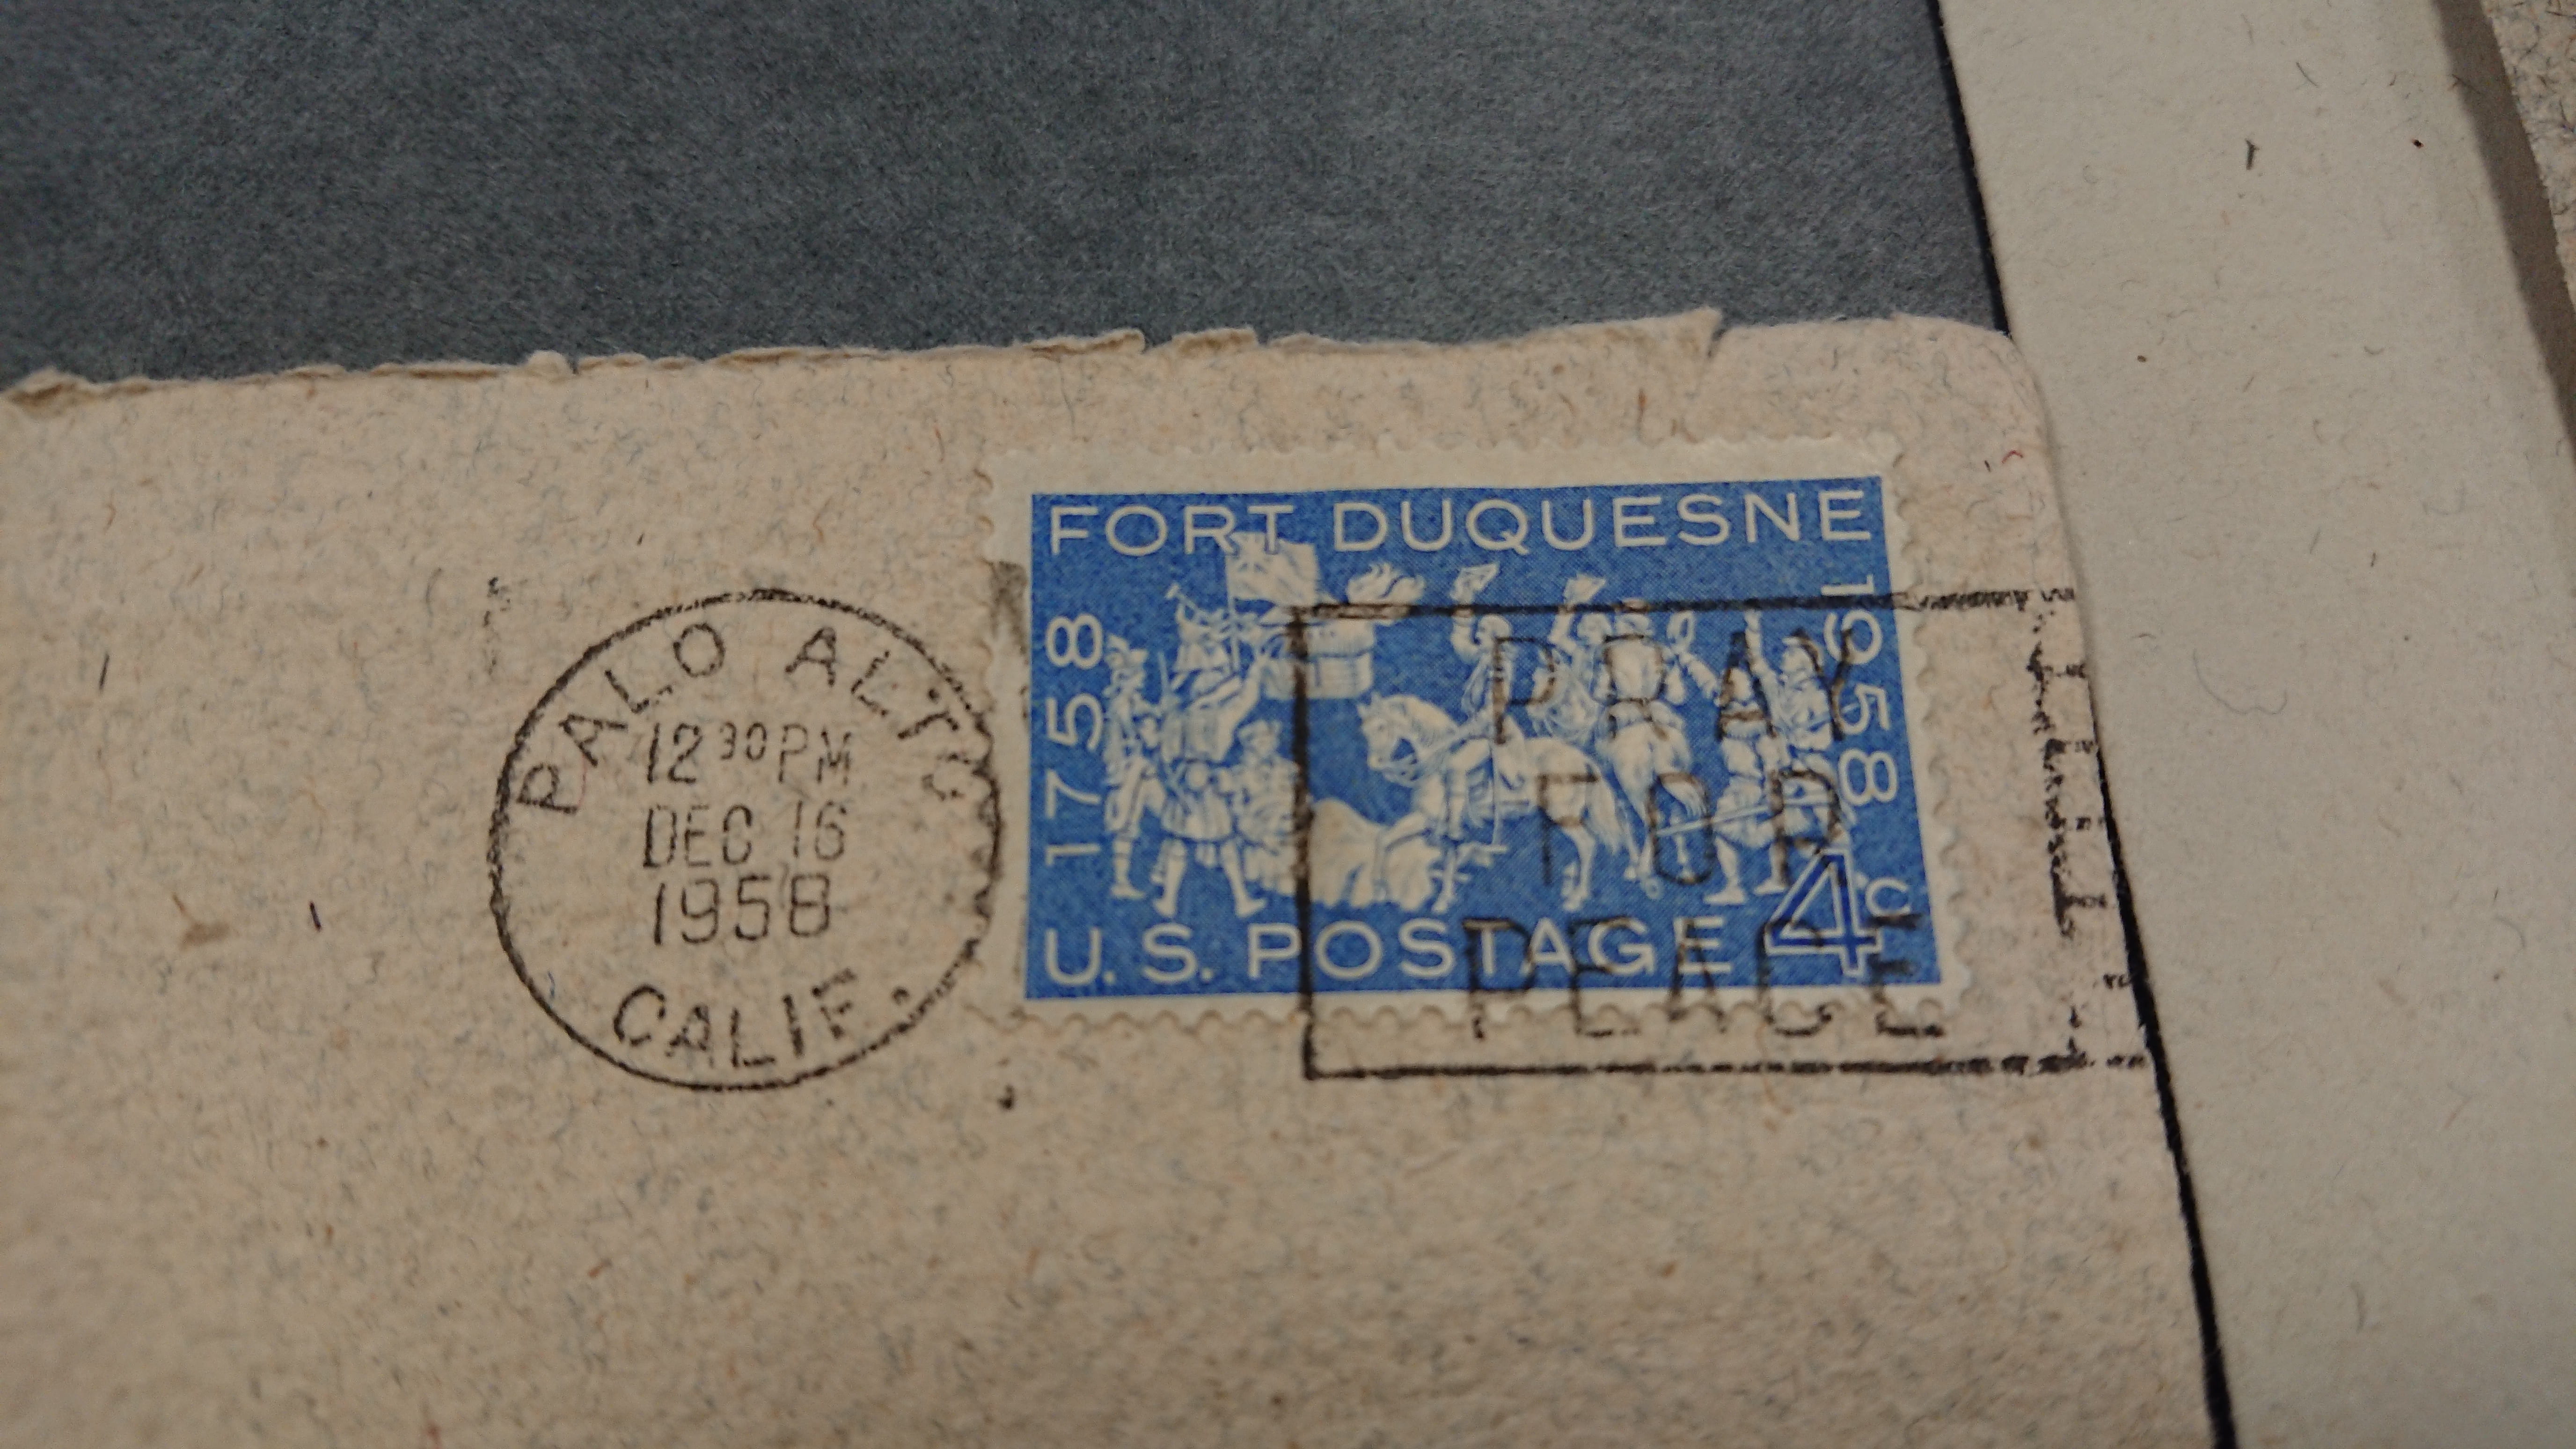 Postage noting the travel through Palo Alto, California on December 15, 1958